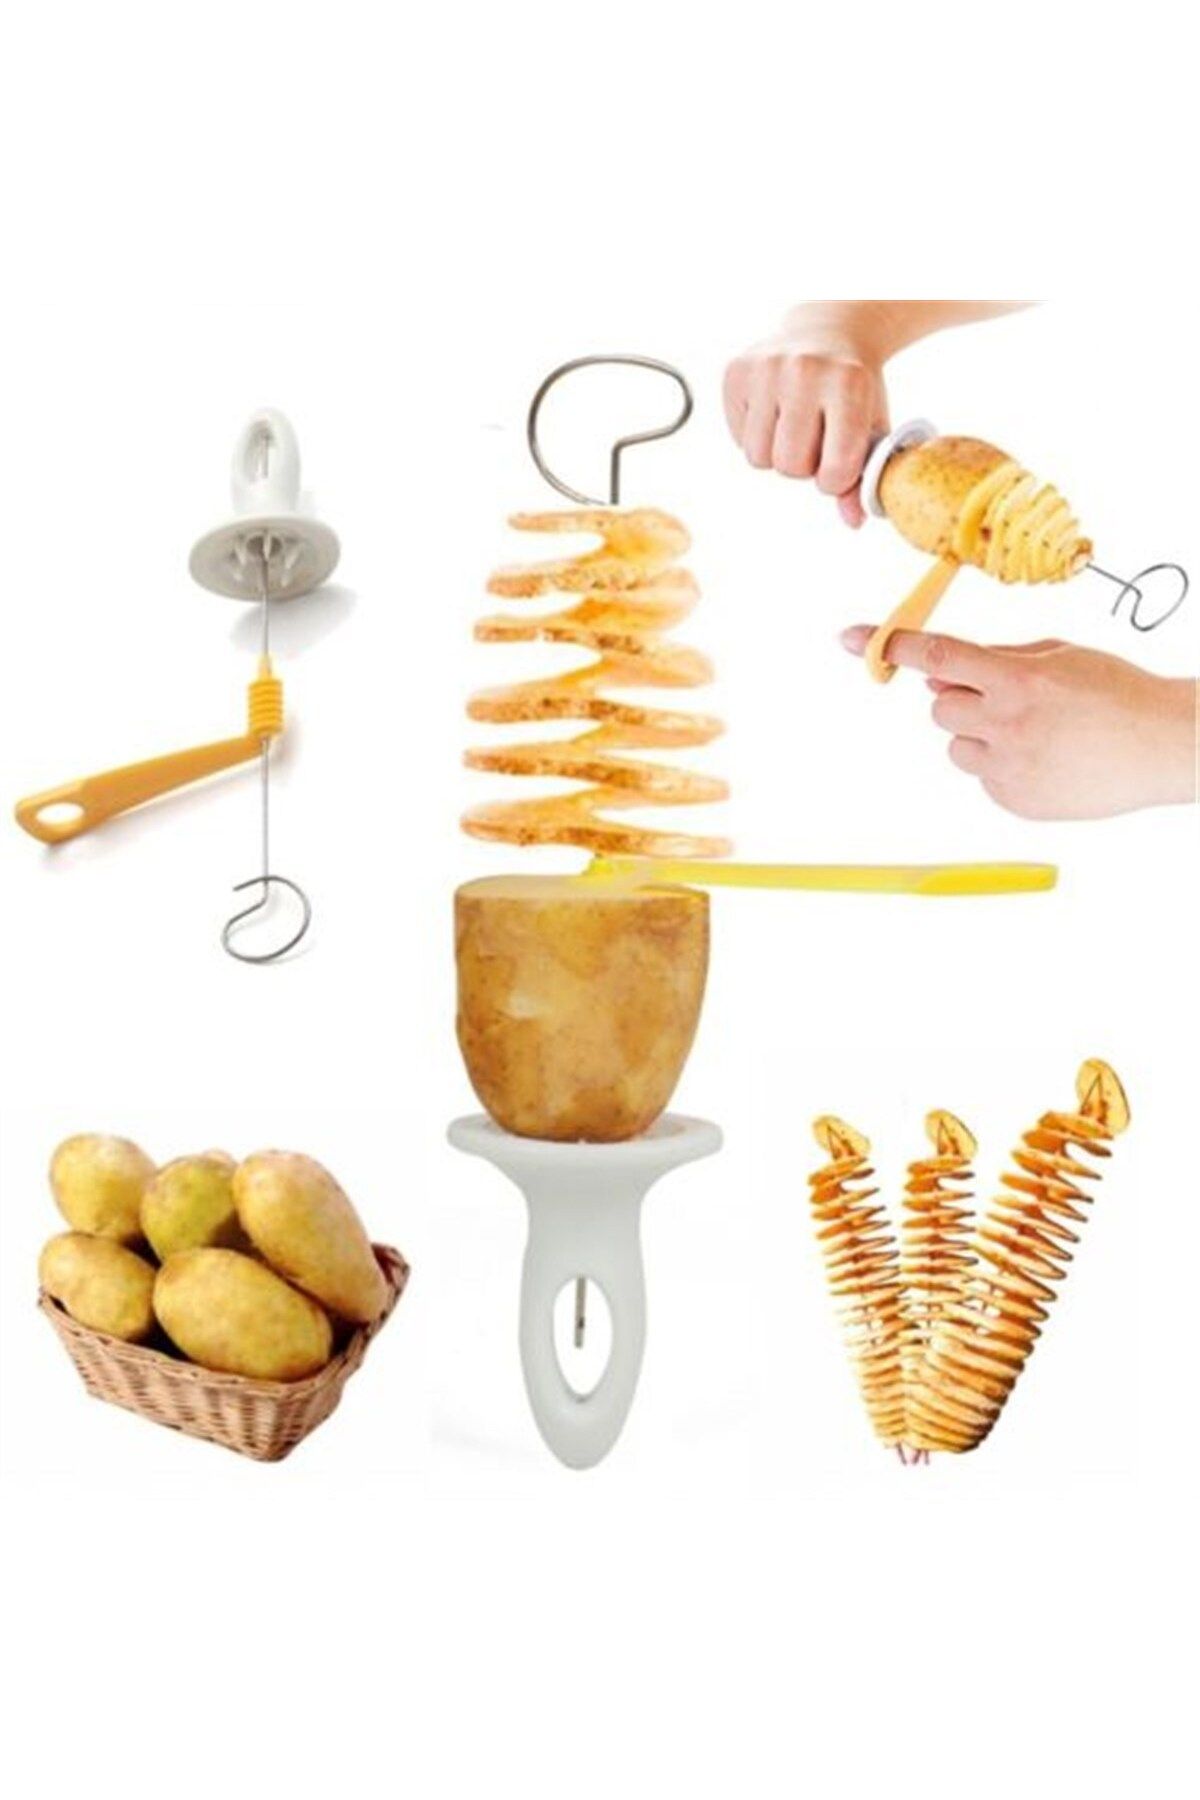 alpanya Spiral Patates Dilimleyici Cips Yapma Makinesi Aparatı Çubukta Patates Aparatı